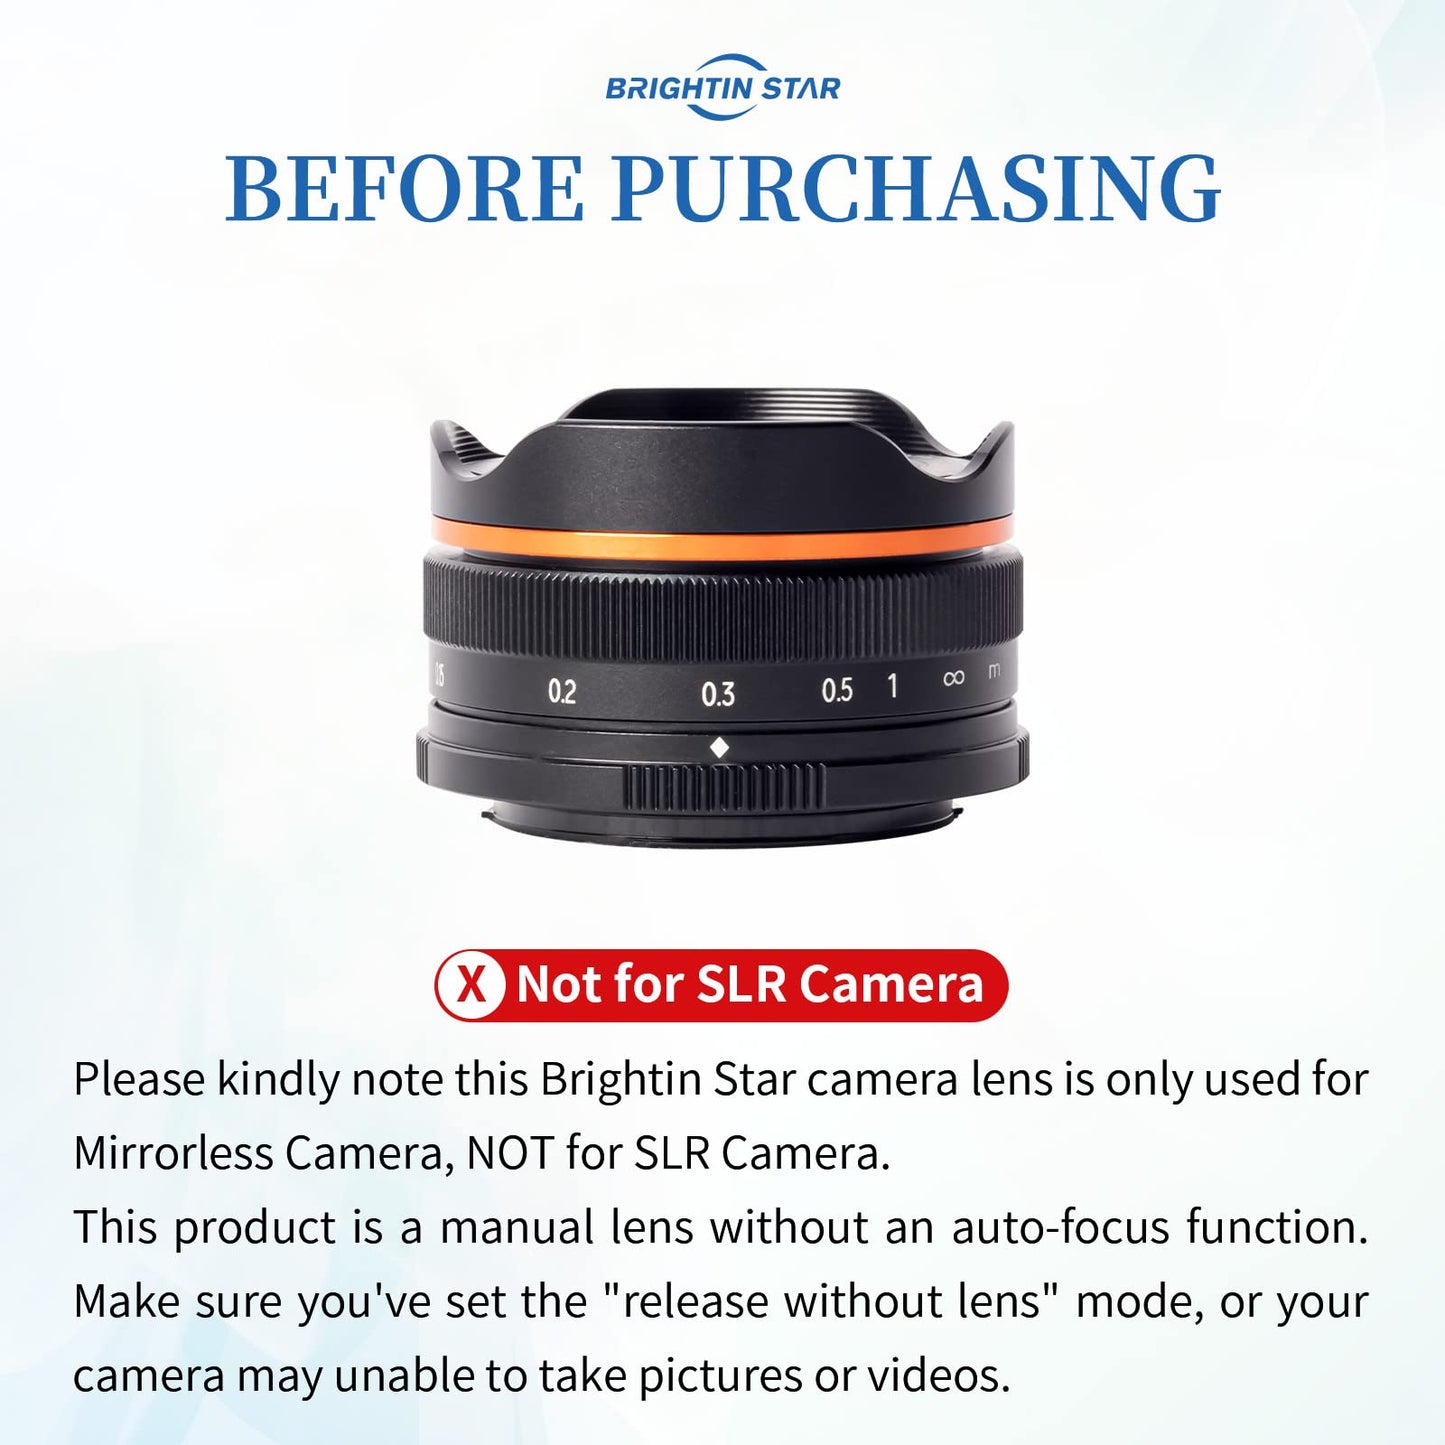 Brightin Star 10mm F5.6 Fisheye Lens Wide-Angle Lens Pancake Lens Manual Fixed Focus Lens